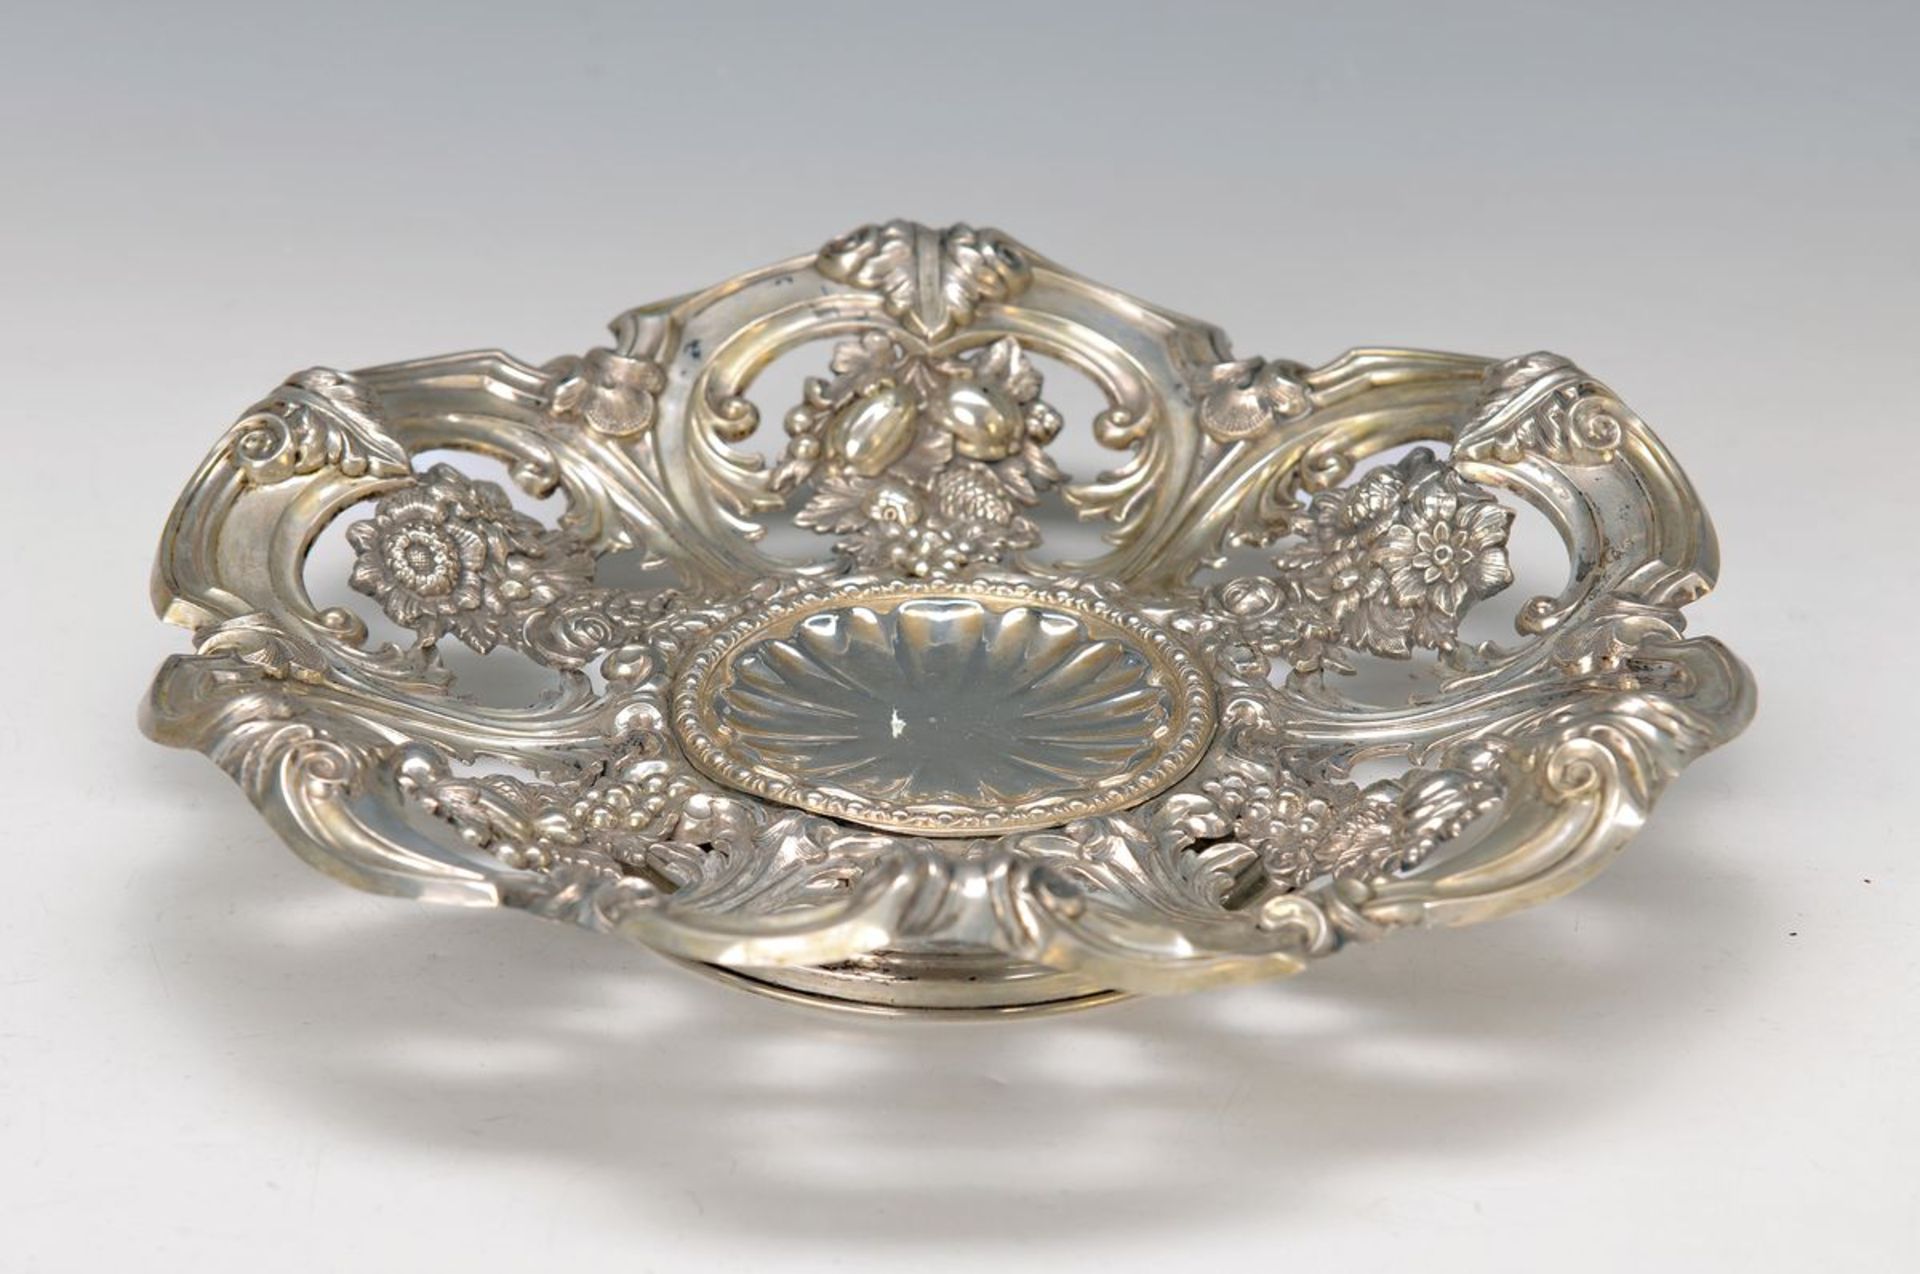 serving bowl, German, around 1835-45, 12-lot silver, fine breakthrough work, partially engraved,